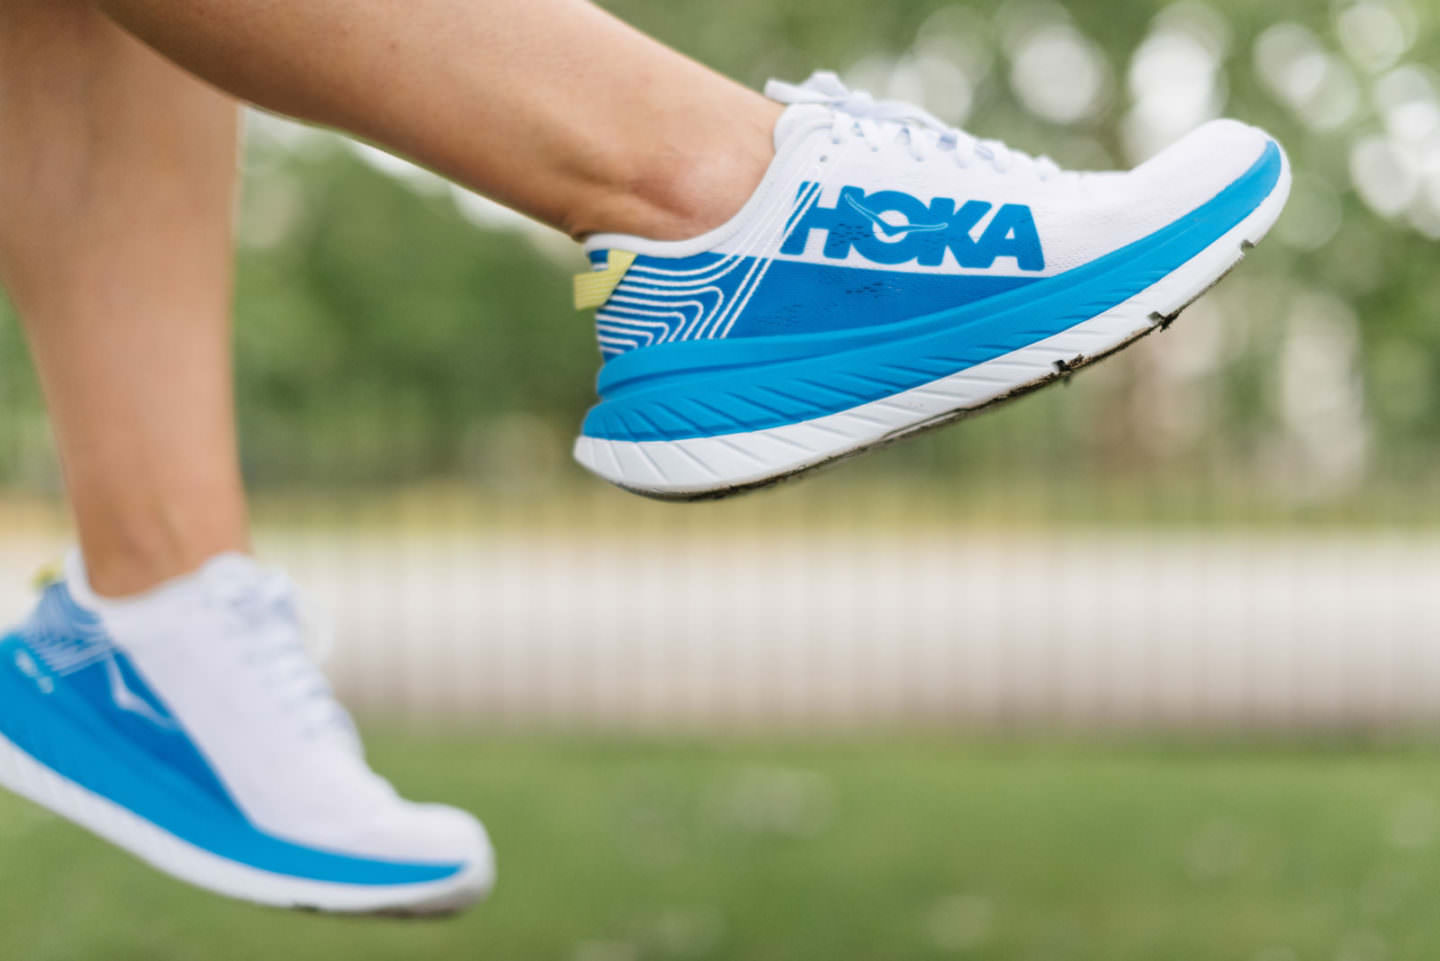 hoka sponsored runners